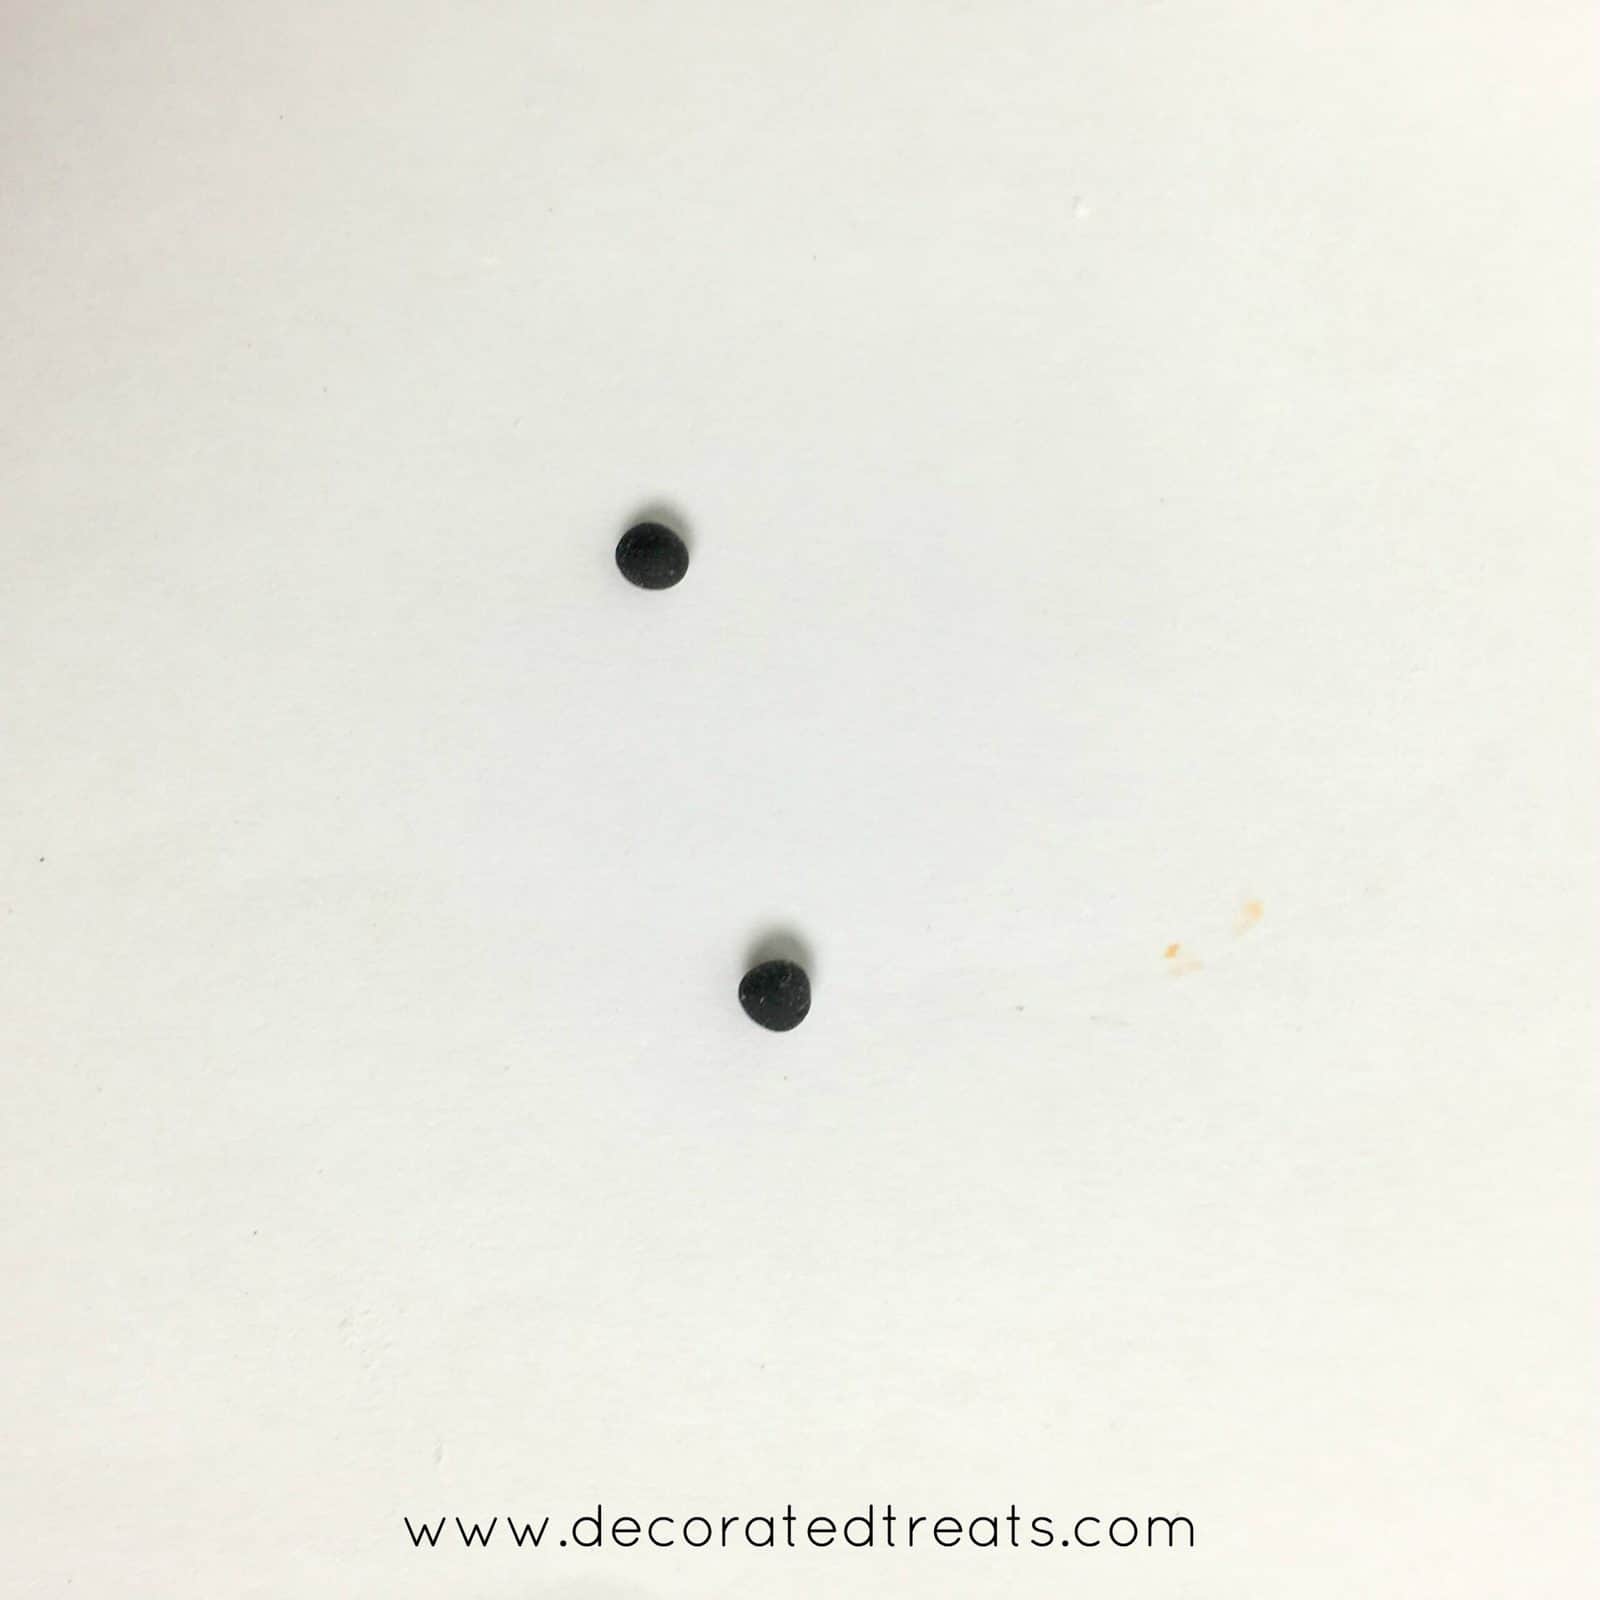 2 tiny round balls in black fondant